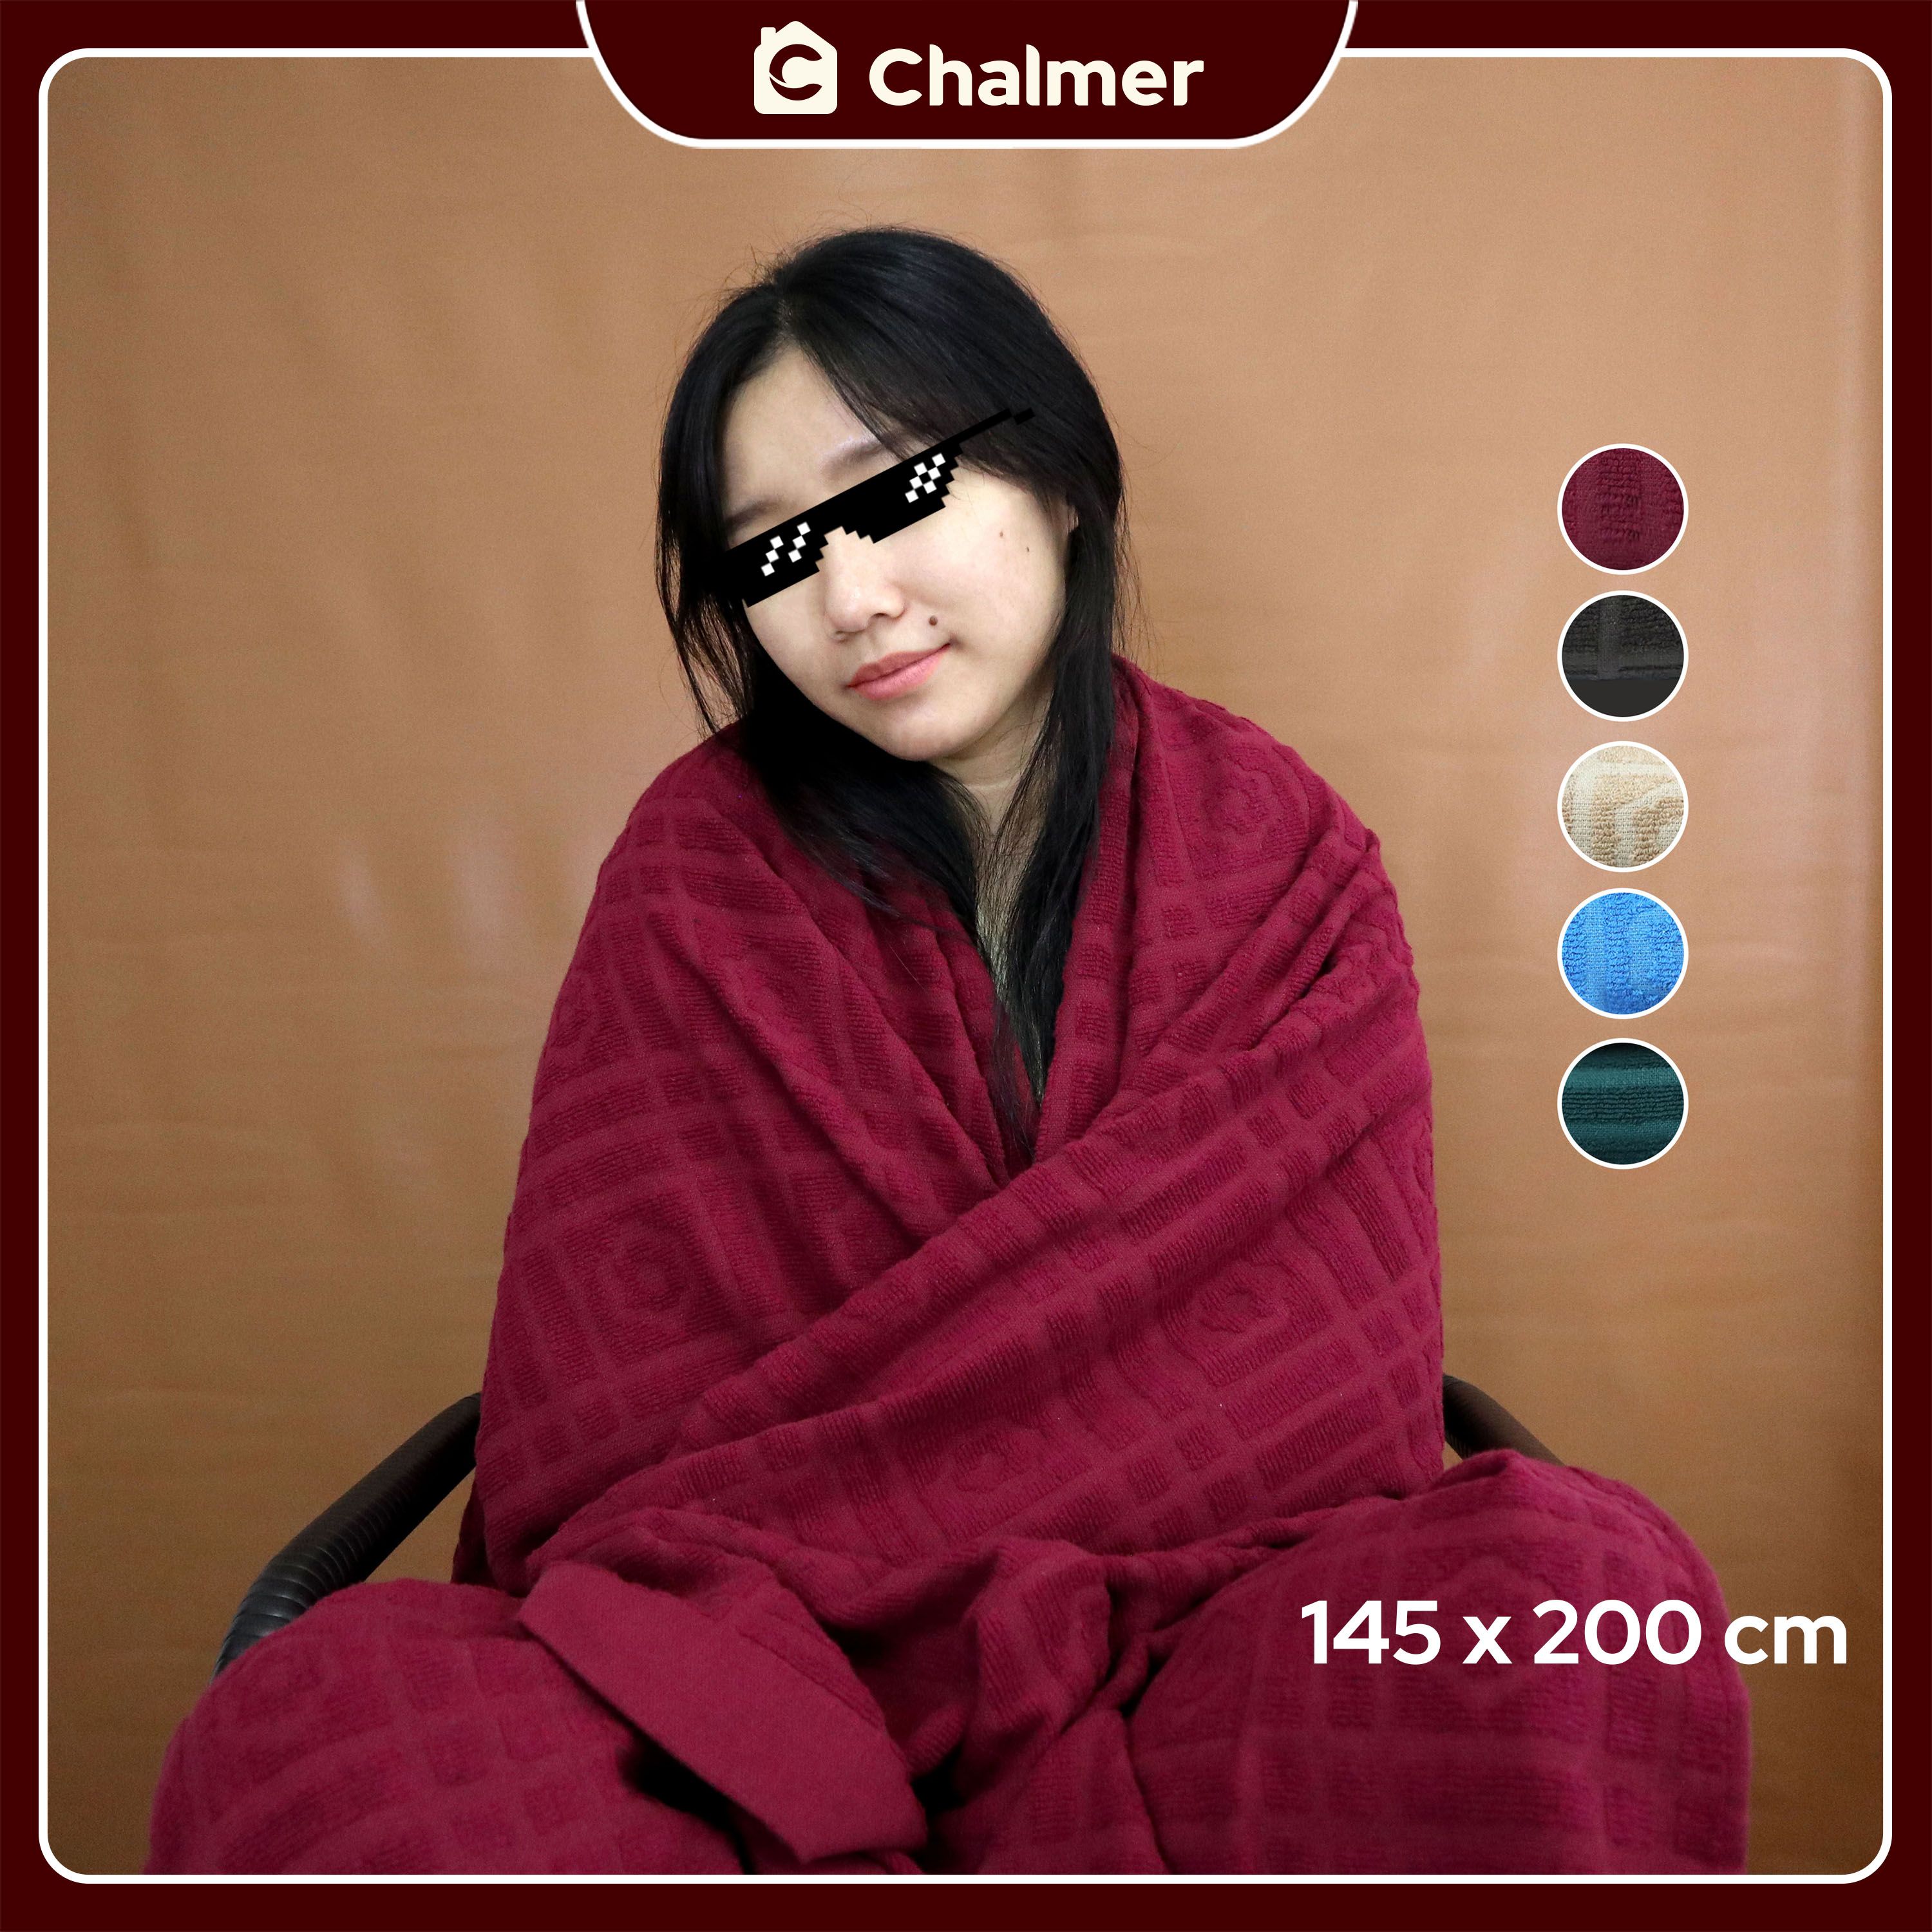 Selimut Katun Chalmer Ukuran 145x200 cm Terry Cloth Towel Blanket - Dark Brown - 2